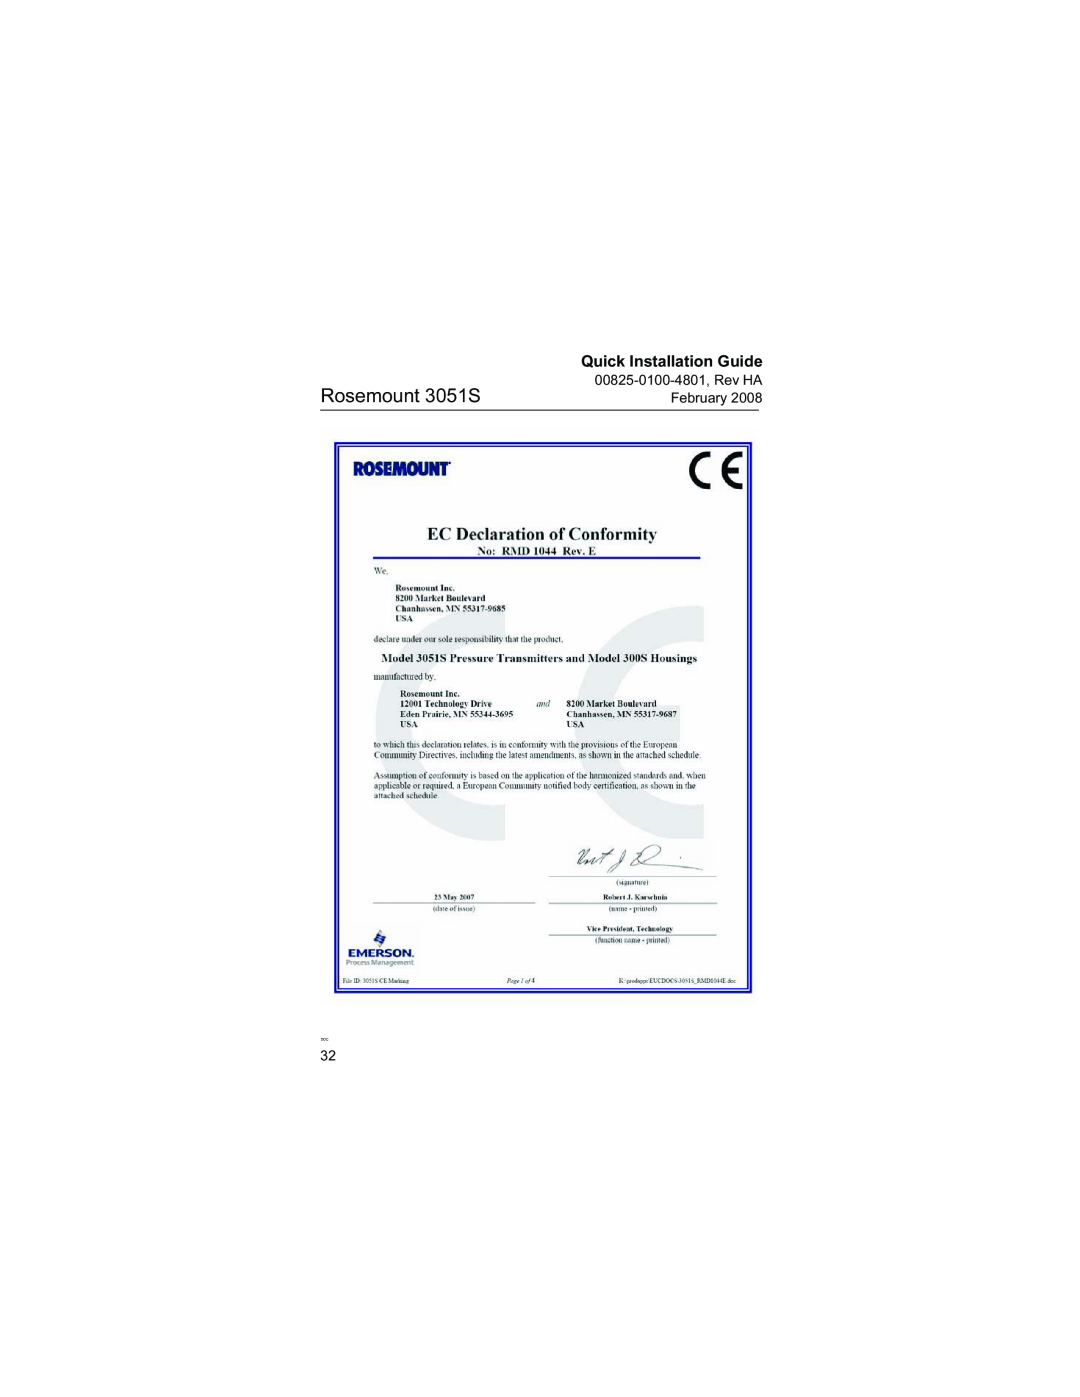 Emerson manual 32DOC, Rosemount 3051S, Quick Installation Guide, 00825-0100-4801, Rev HA February 